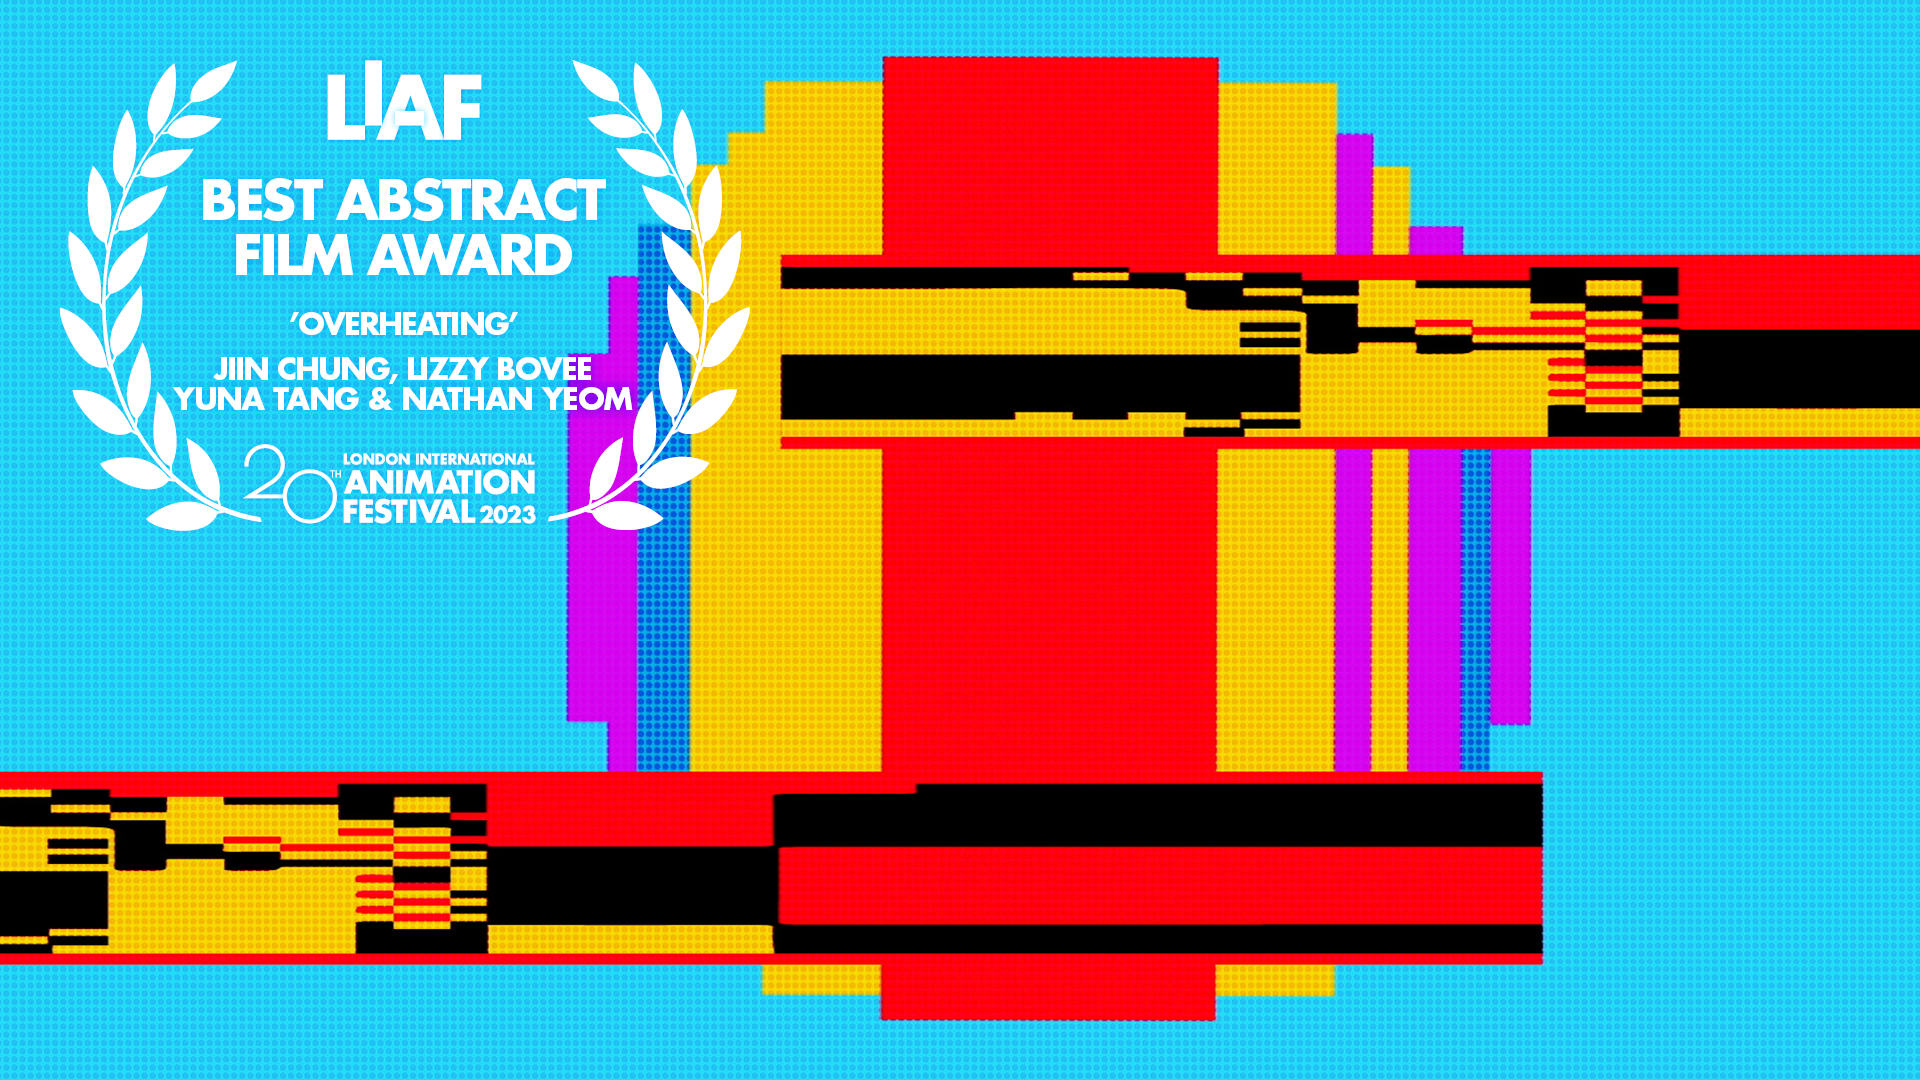 LIAF, London International Animation Festival, Best Abstract Film Award, Overheating, Jiin Chung, Lizzy Bovee, Yuna Tang, Nathan Yeom